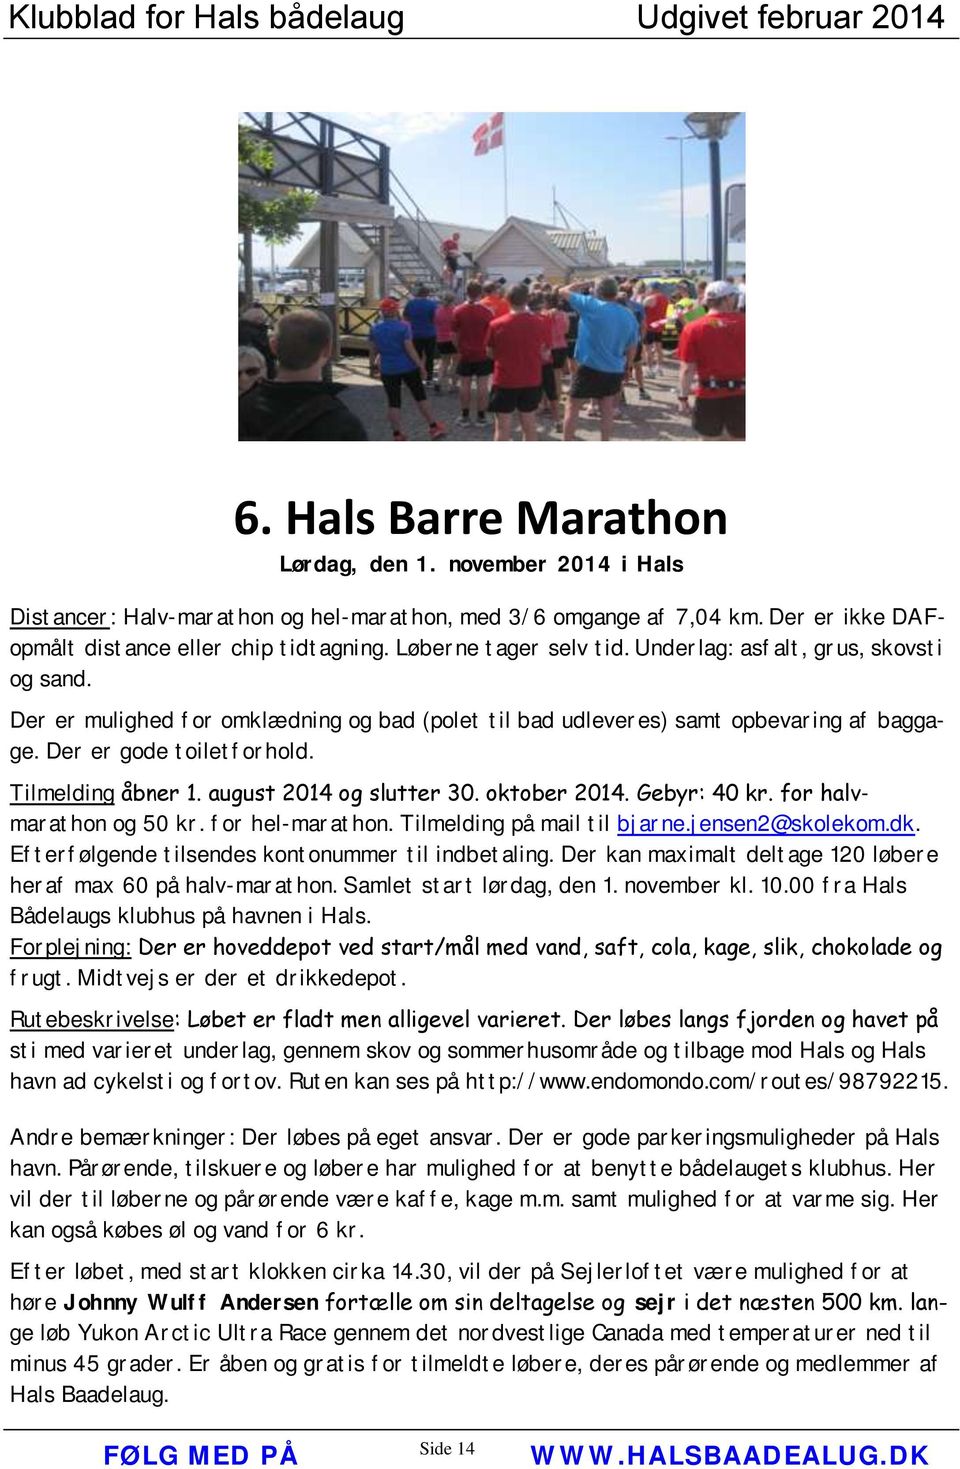 Tilmelding åbner 1. august 2014 og slutter 30. oktober 2014. Gebyr: 40 kr. for halvmarathon og 50 kr. for hel-marathon. Tilmelding på mail til bjarne.jensen2@skolekom.dk.